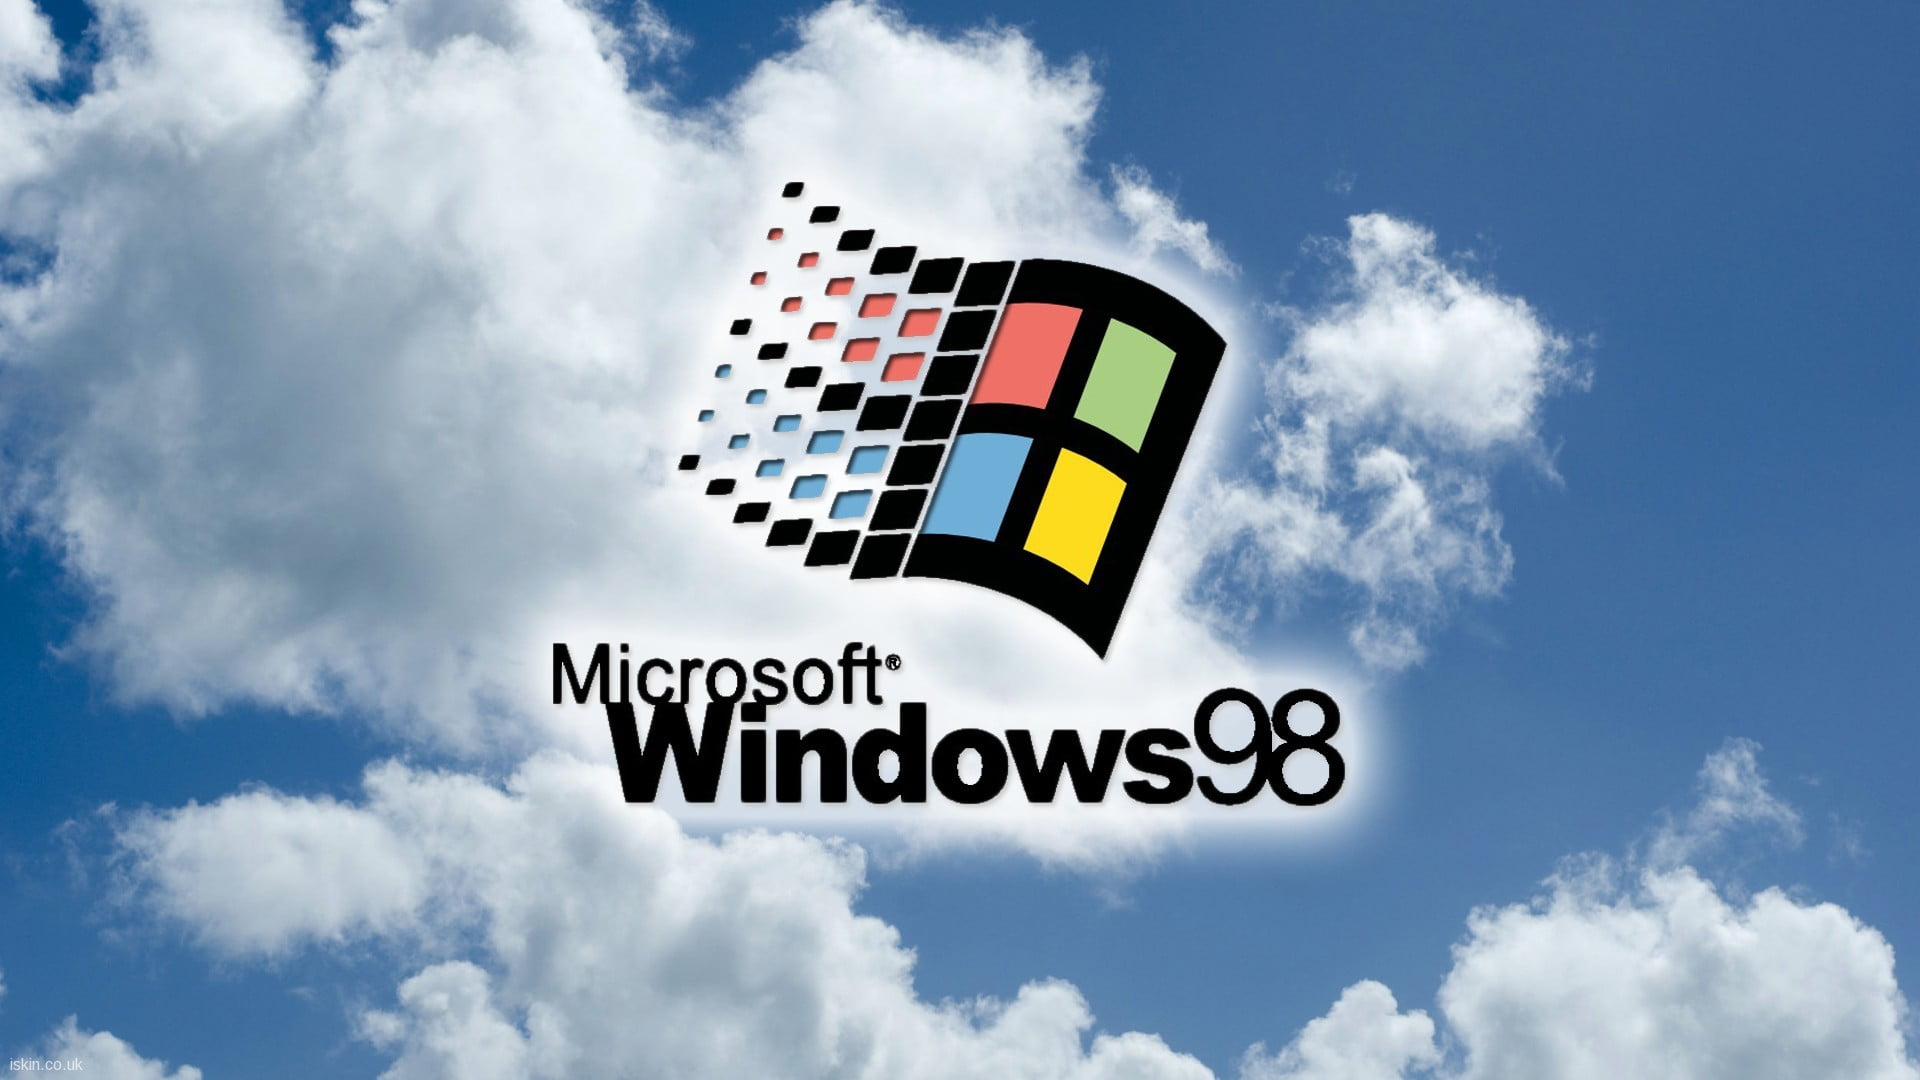 Microsoft Windows 98 logo